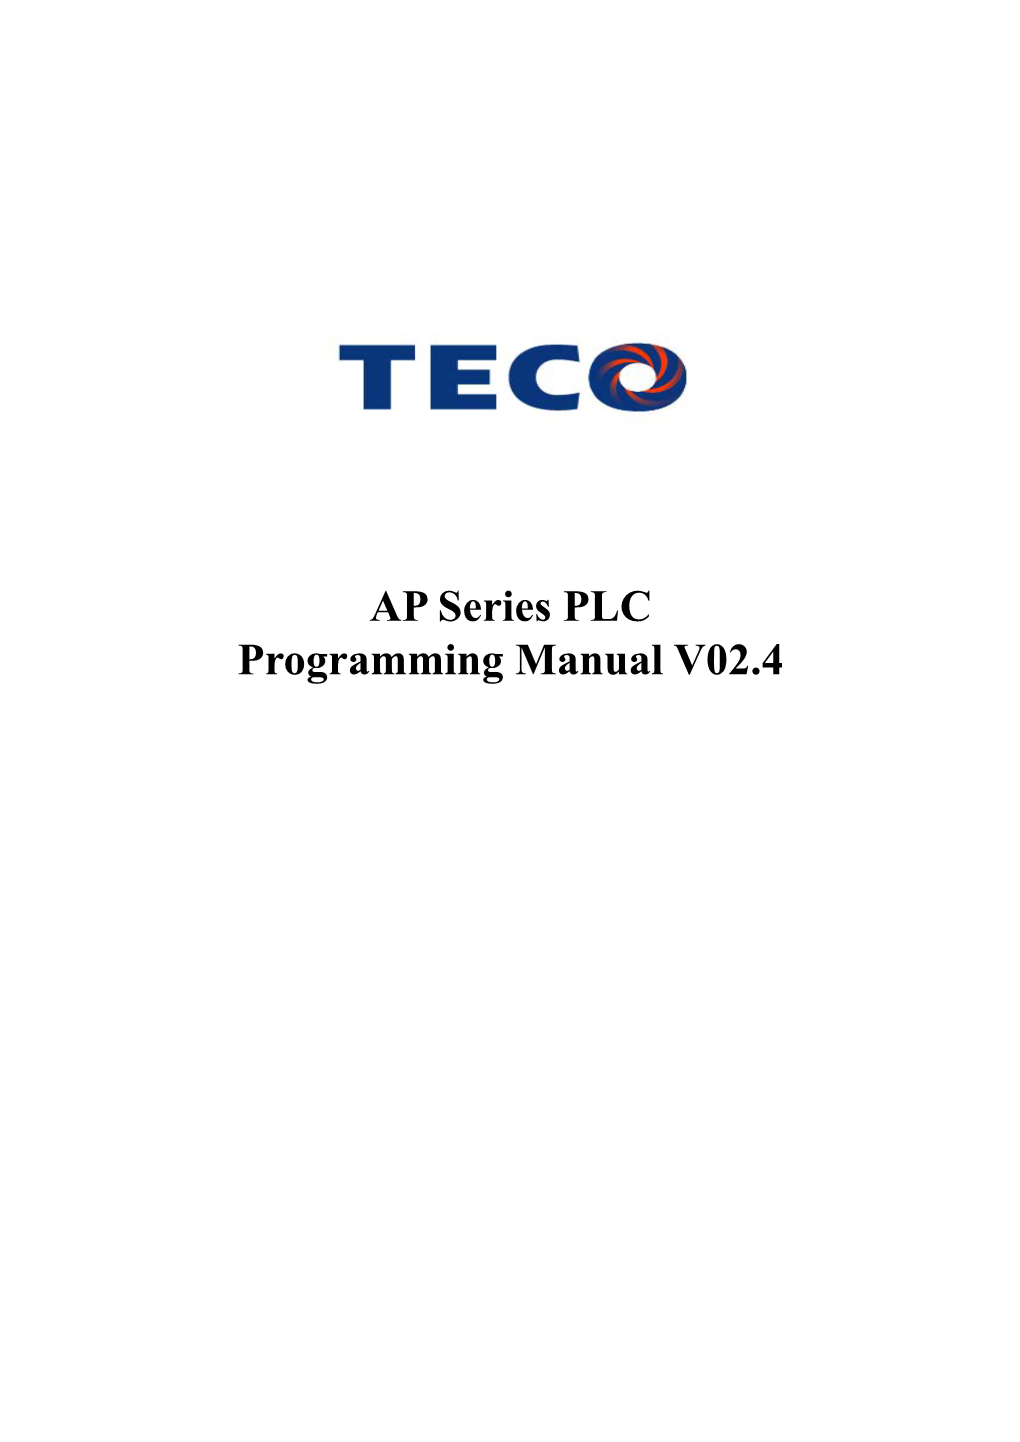 AP Series PLC Programming Manual V02.4